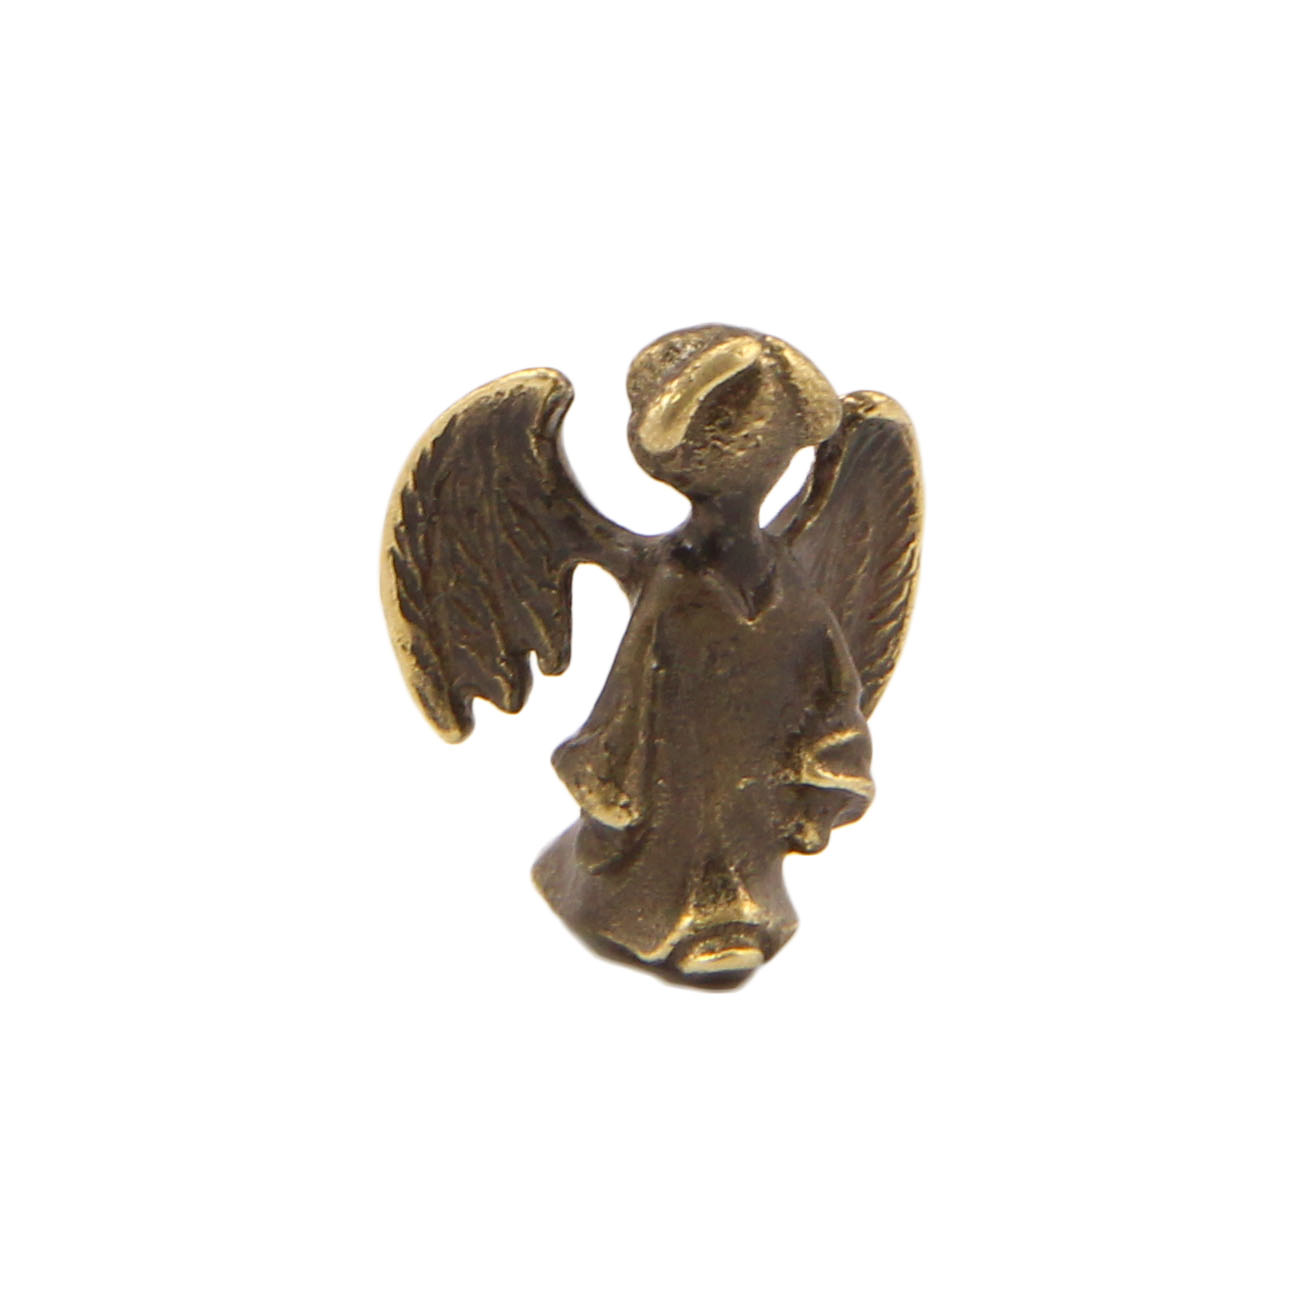 Бронзовый сувенир Ангел безликий малыйФото 15455-10.jpg